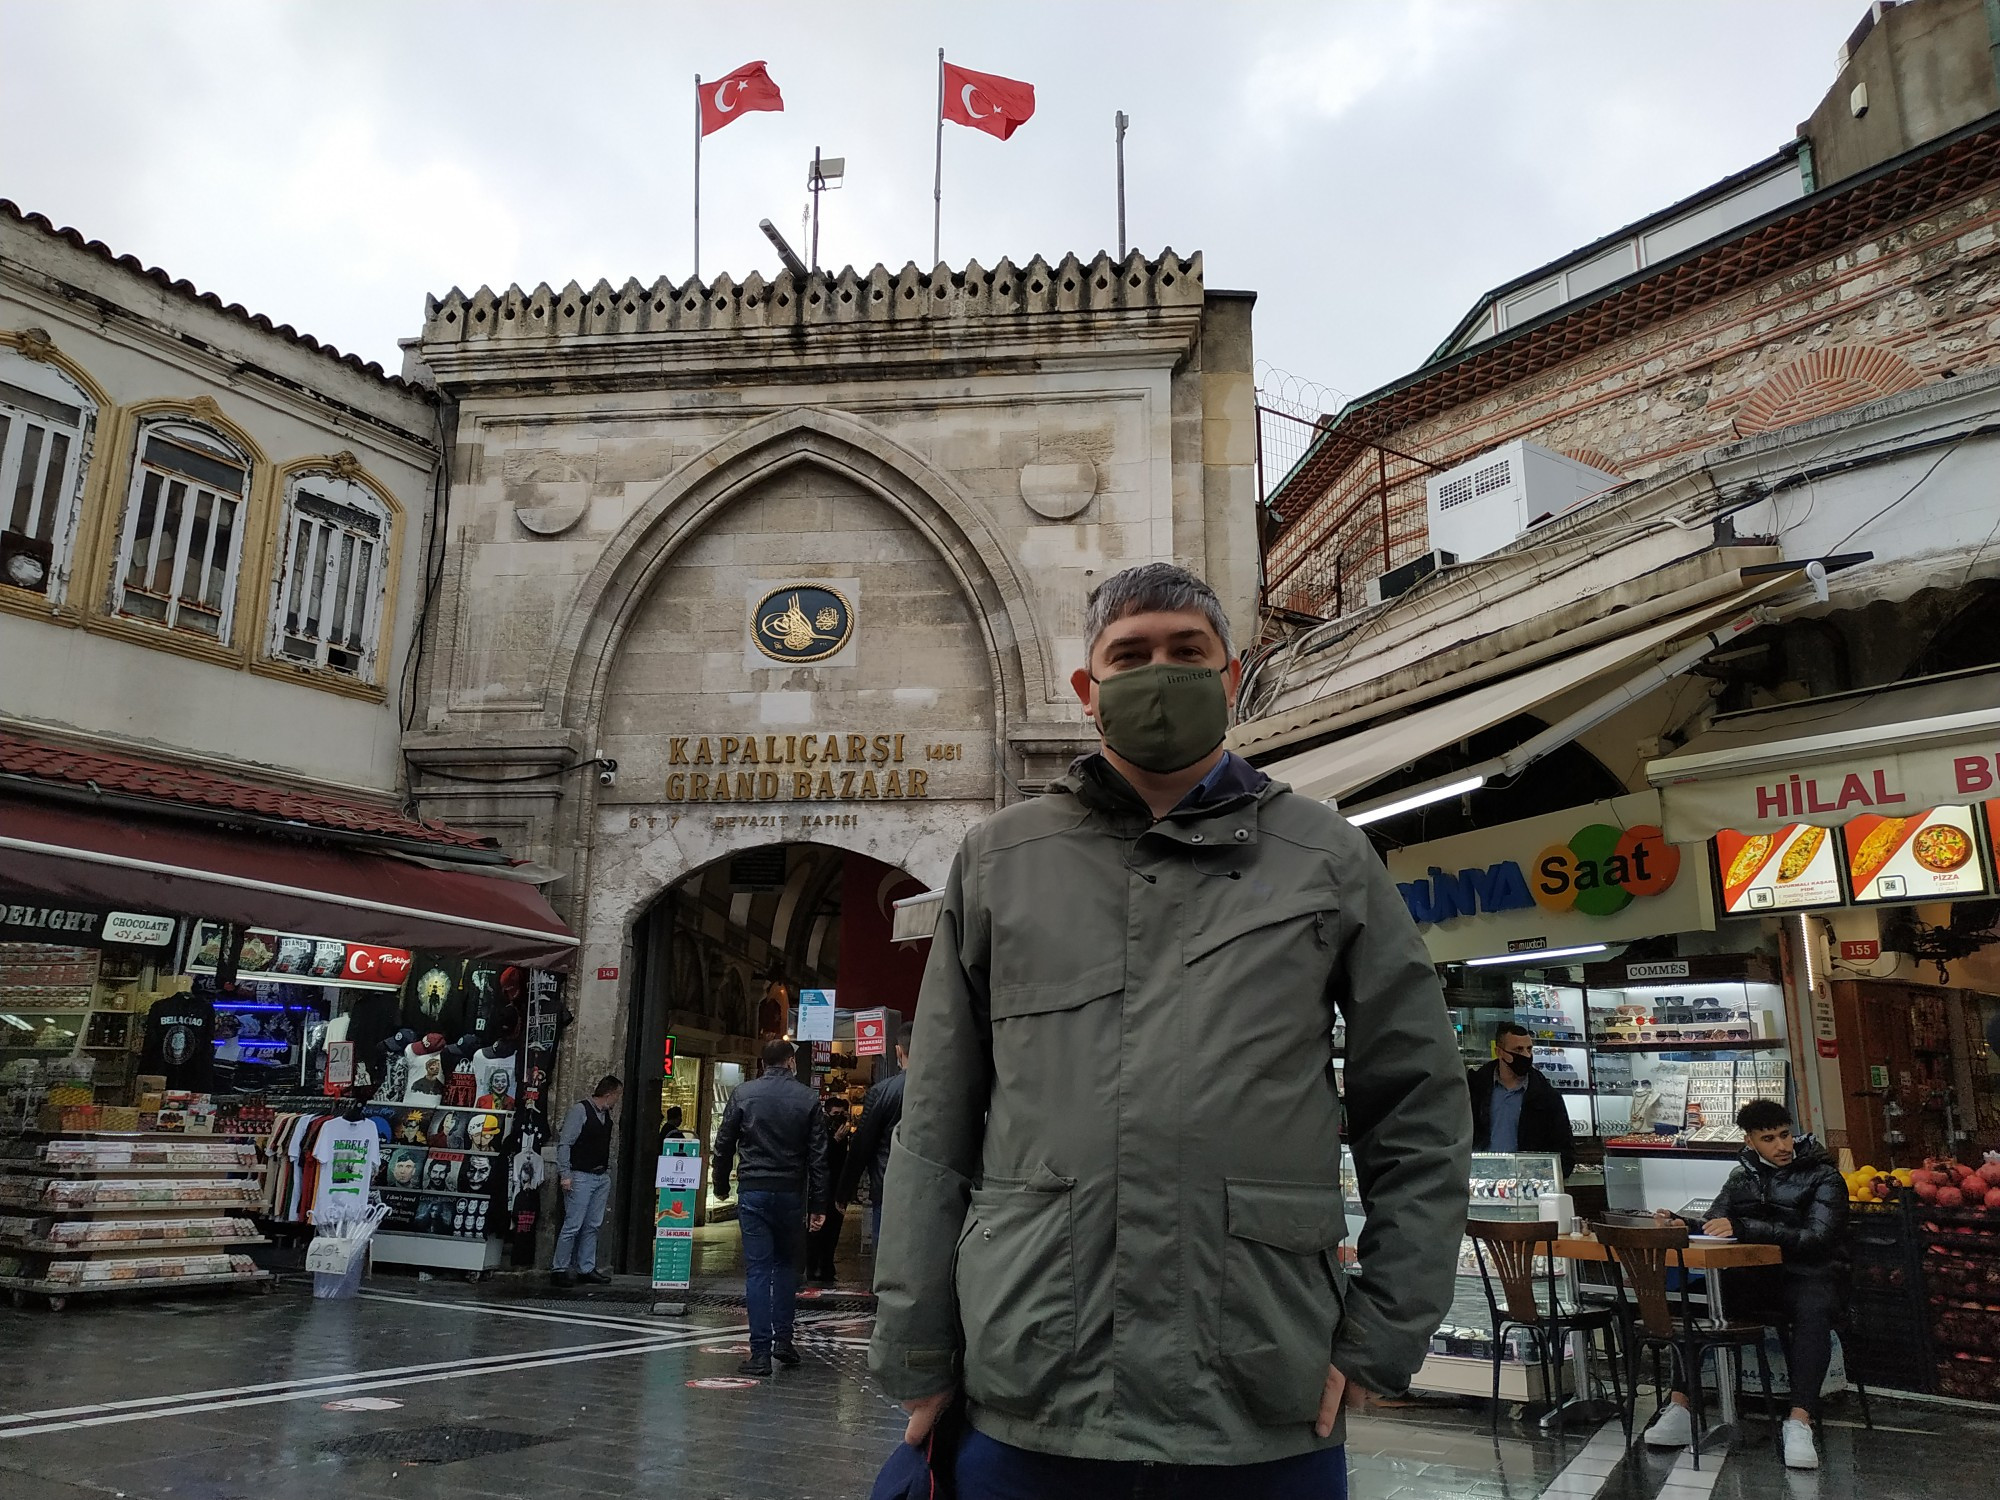 Стамбул. Я у входа на Гранд Базар. (05.11.2020)